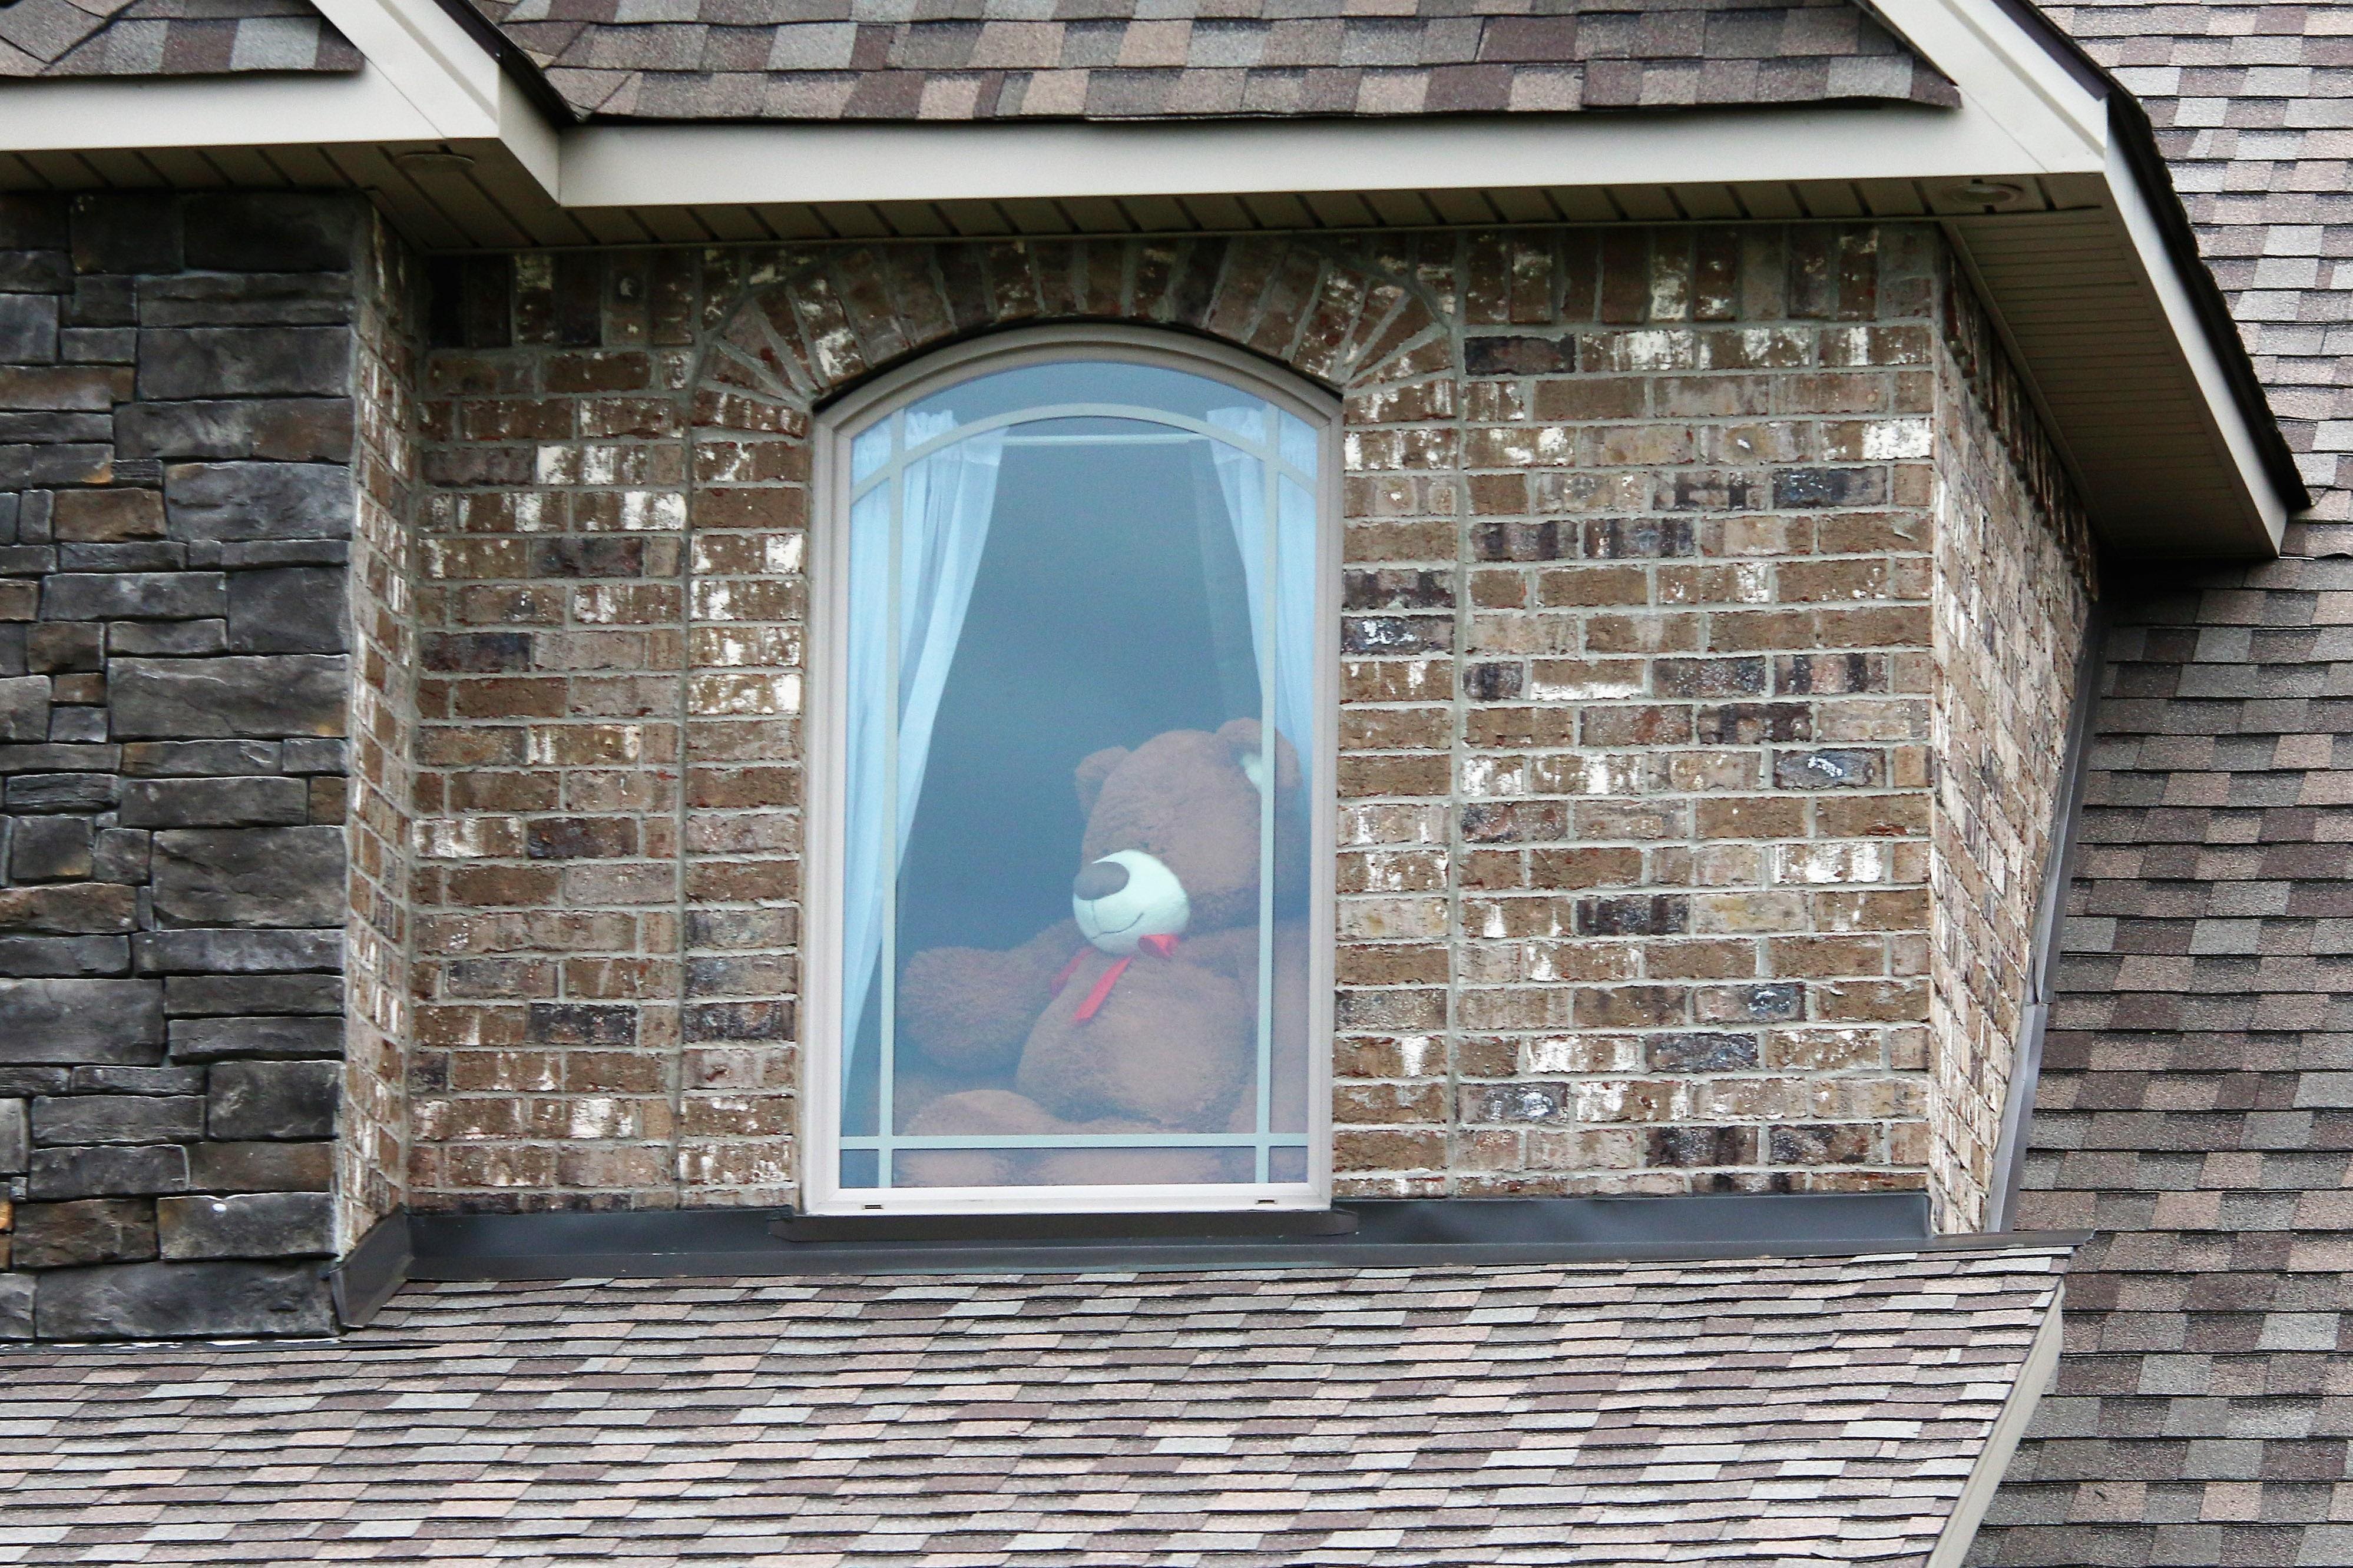 A teddy bear in the window of a home in Murfreesboro, Tenn.